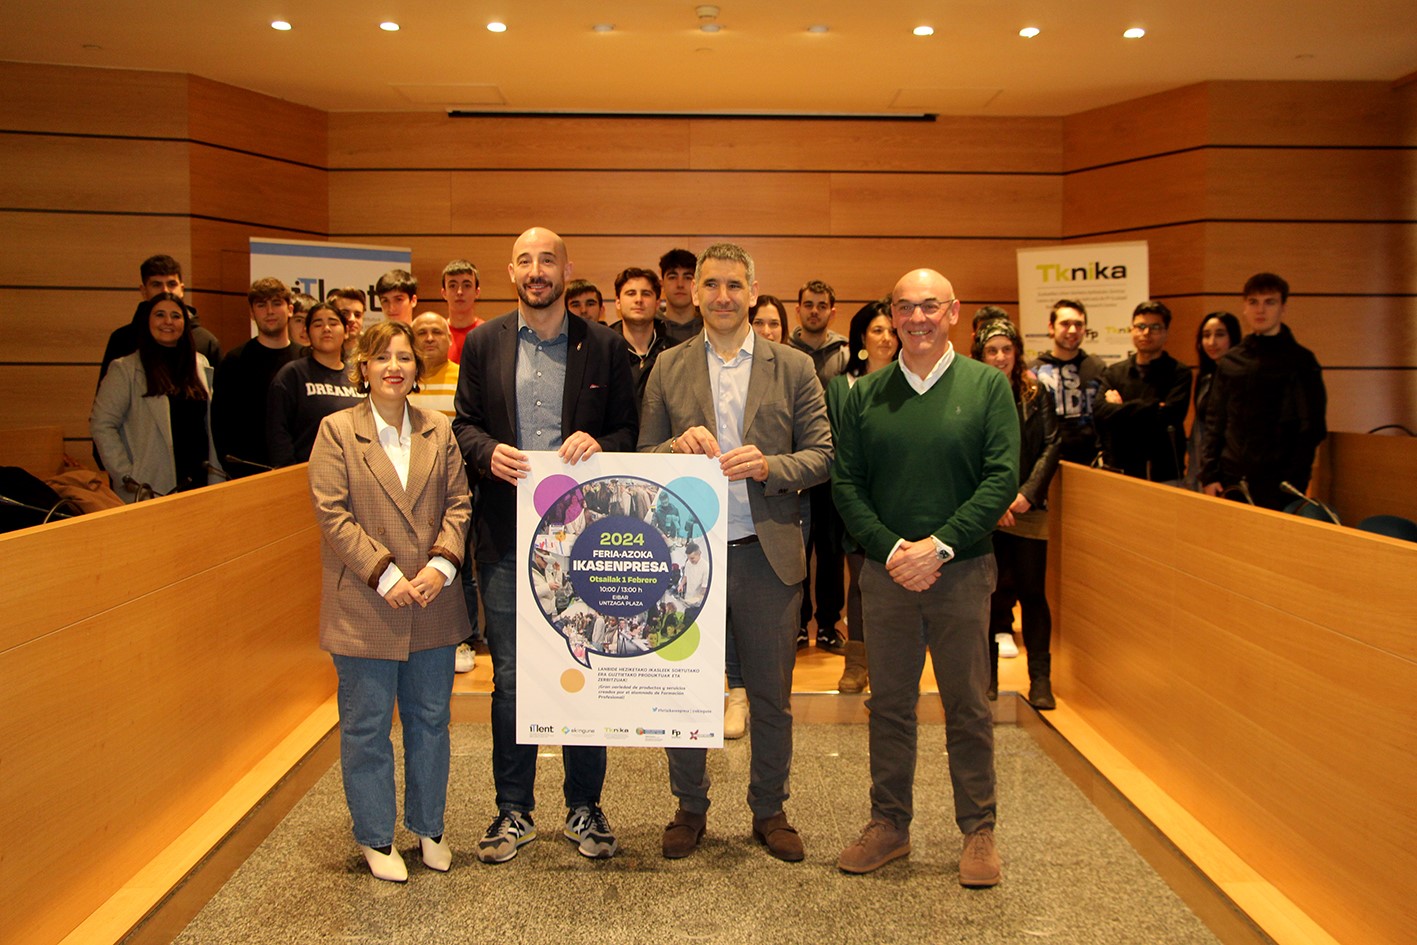 Eibar acogerá el próximo 1 de febrero la XIII Ikasenpresa Azoka con cerca de 2.000 estudiantes de FP de Euskadi